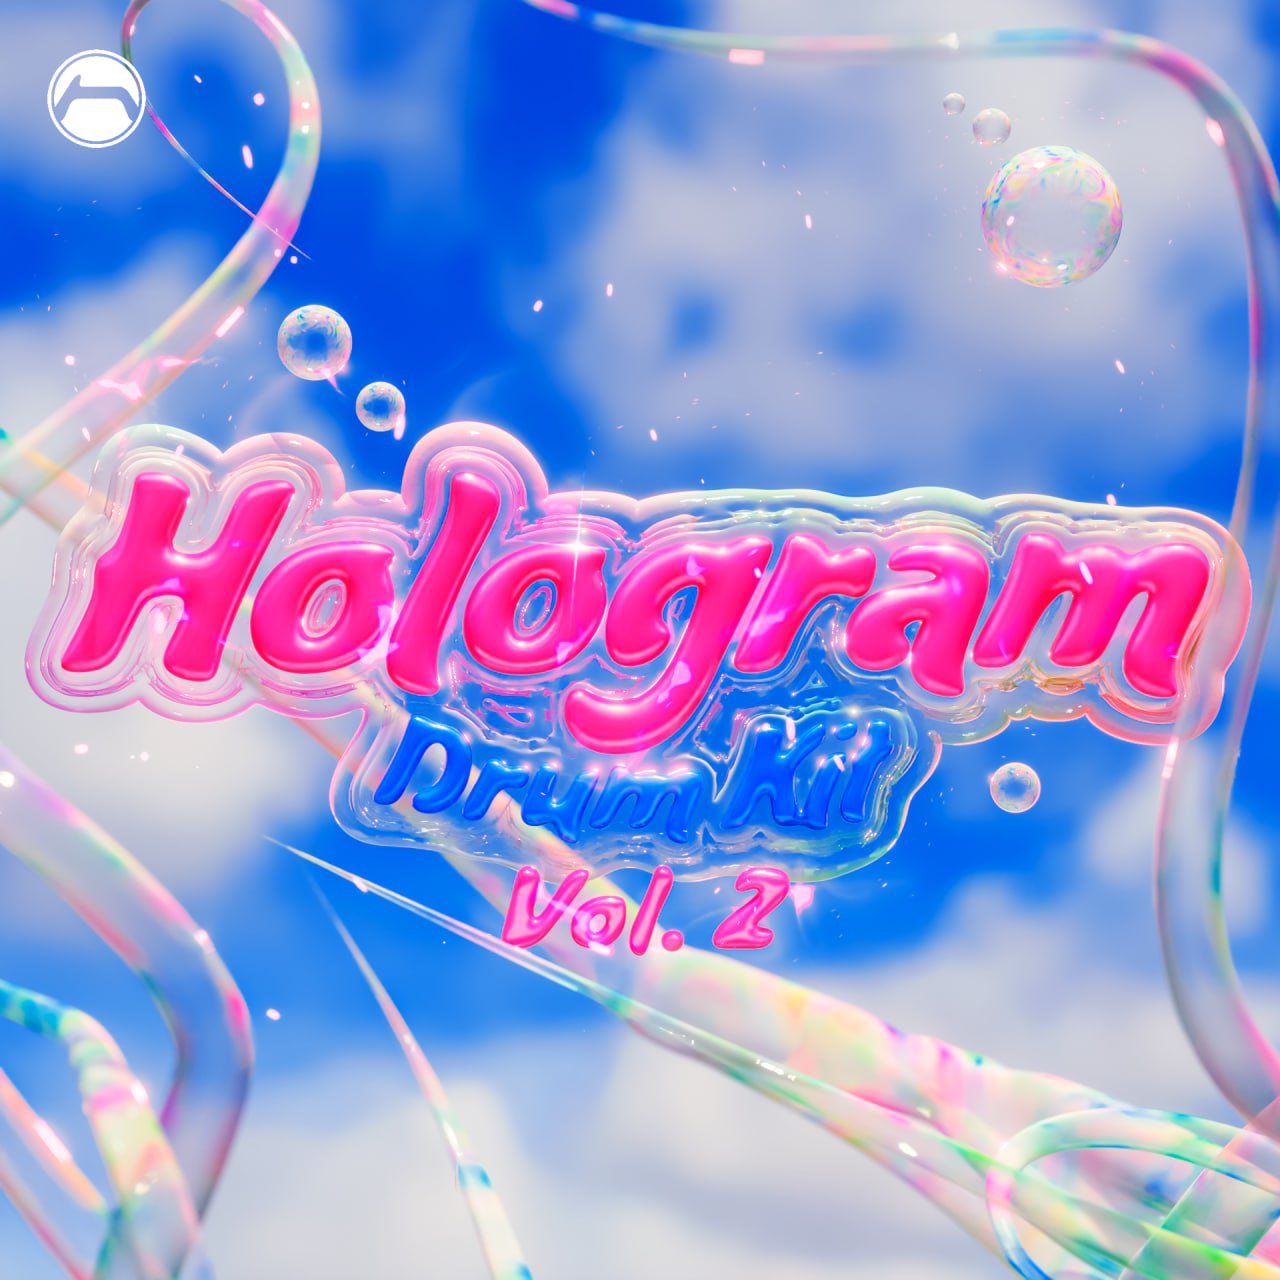 "HOLOGRAM VOL. 2" DRUM KIT